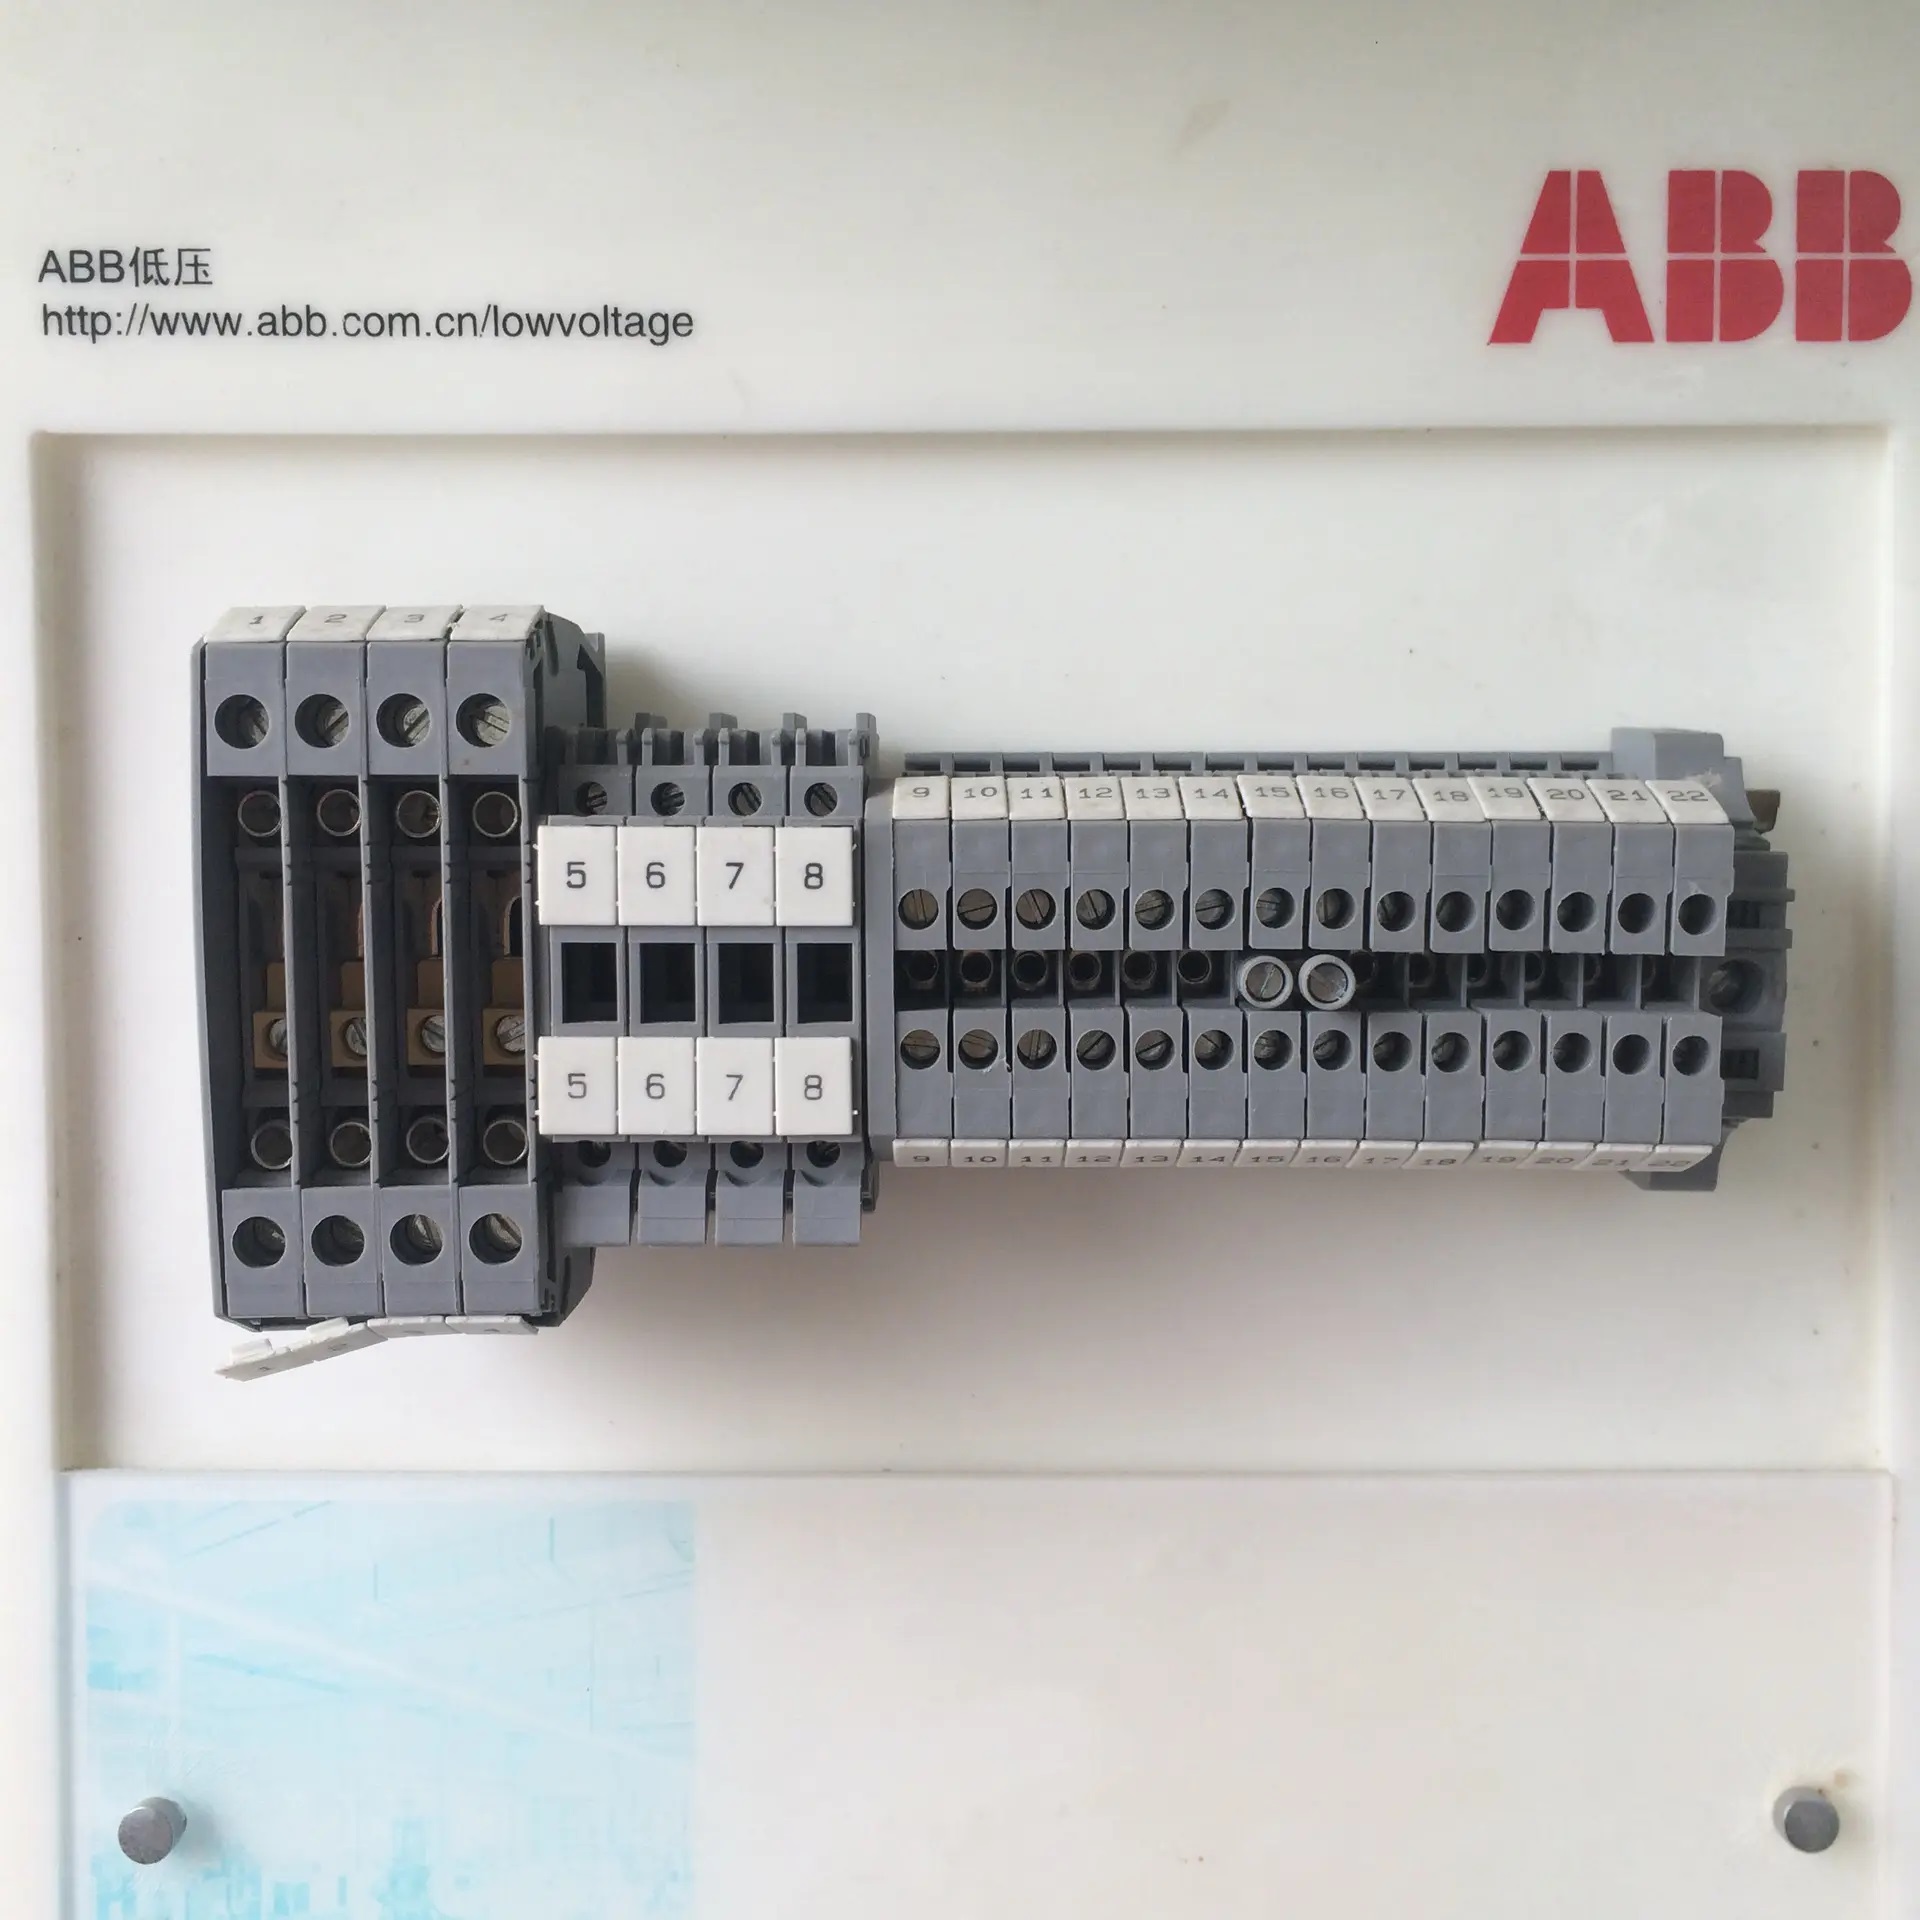 ABB motor spare parts catalogue